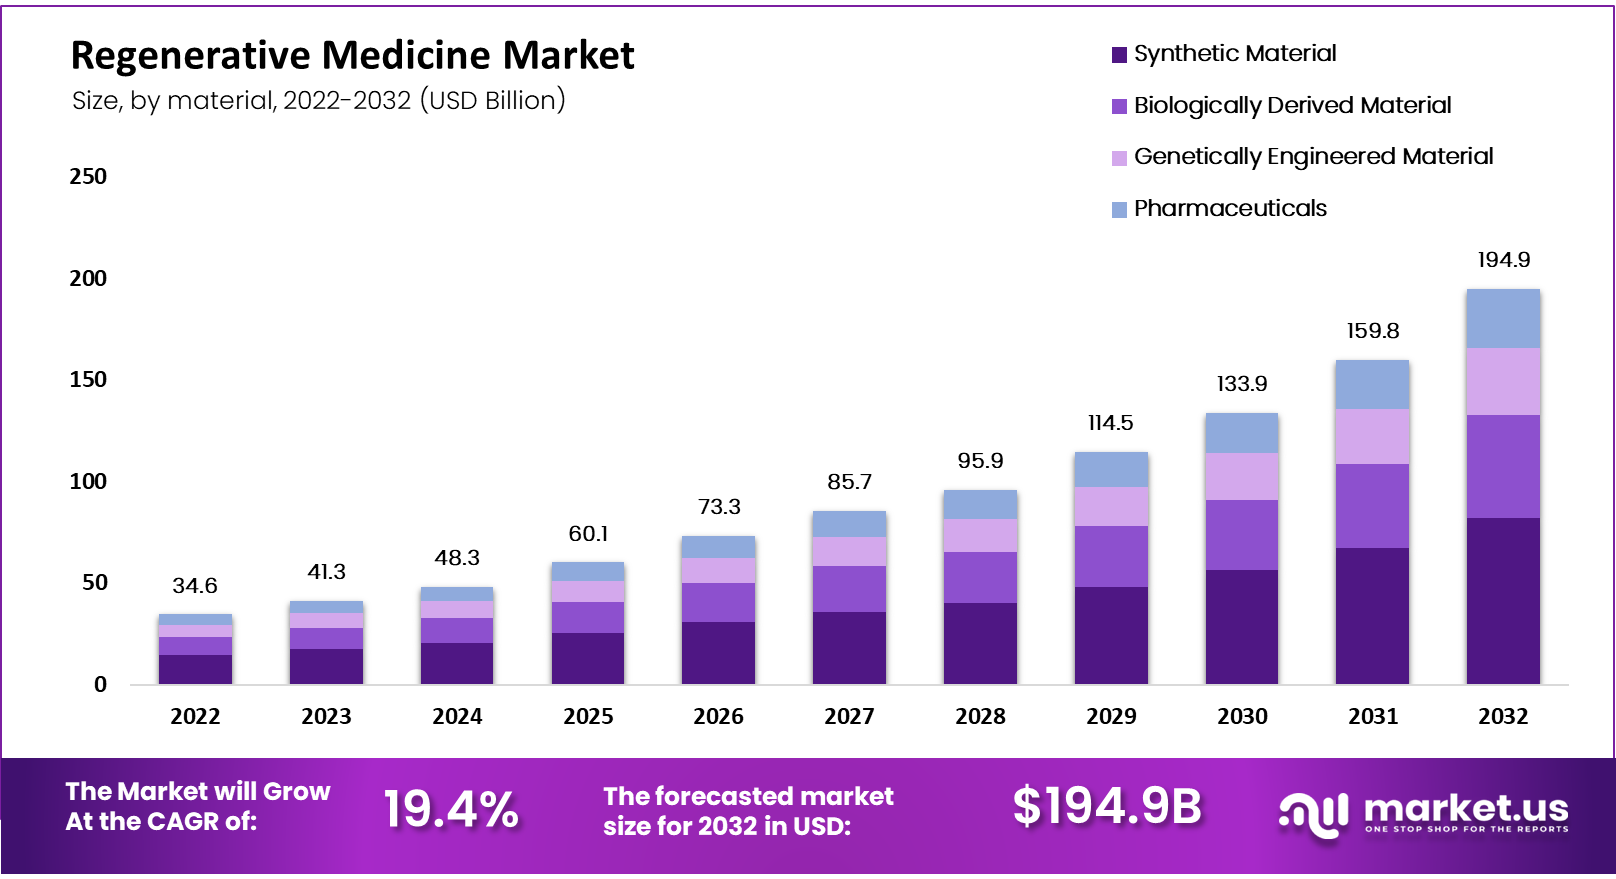 Regenerative Medicine Market Size